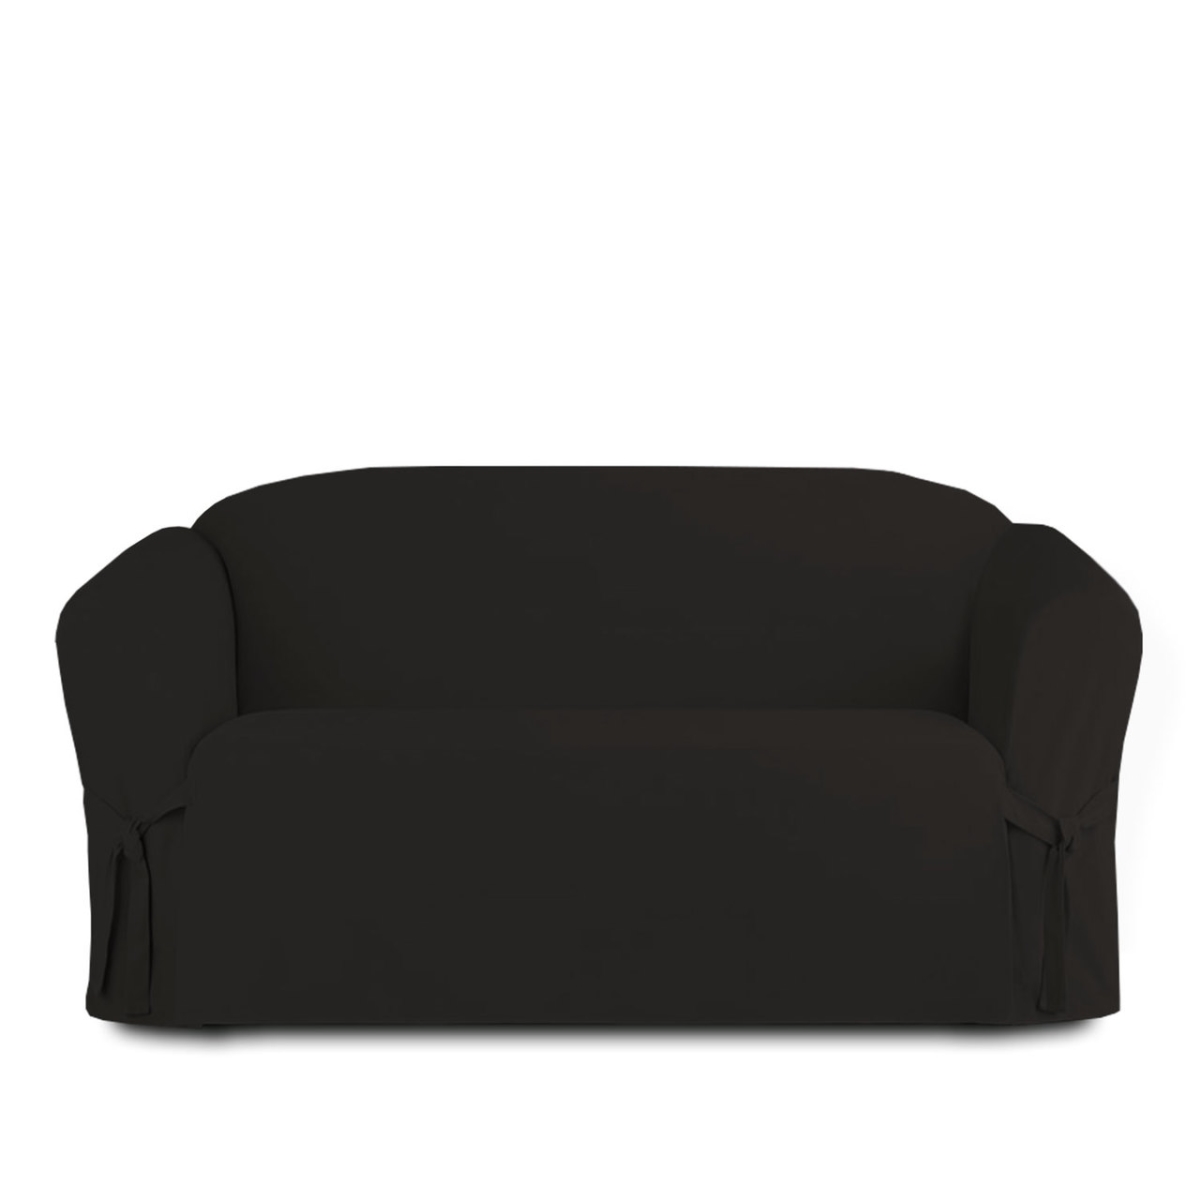 Sc406769 Microsuede Slip Furniture Protector For Loveseat, Black